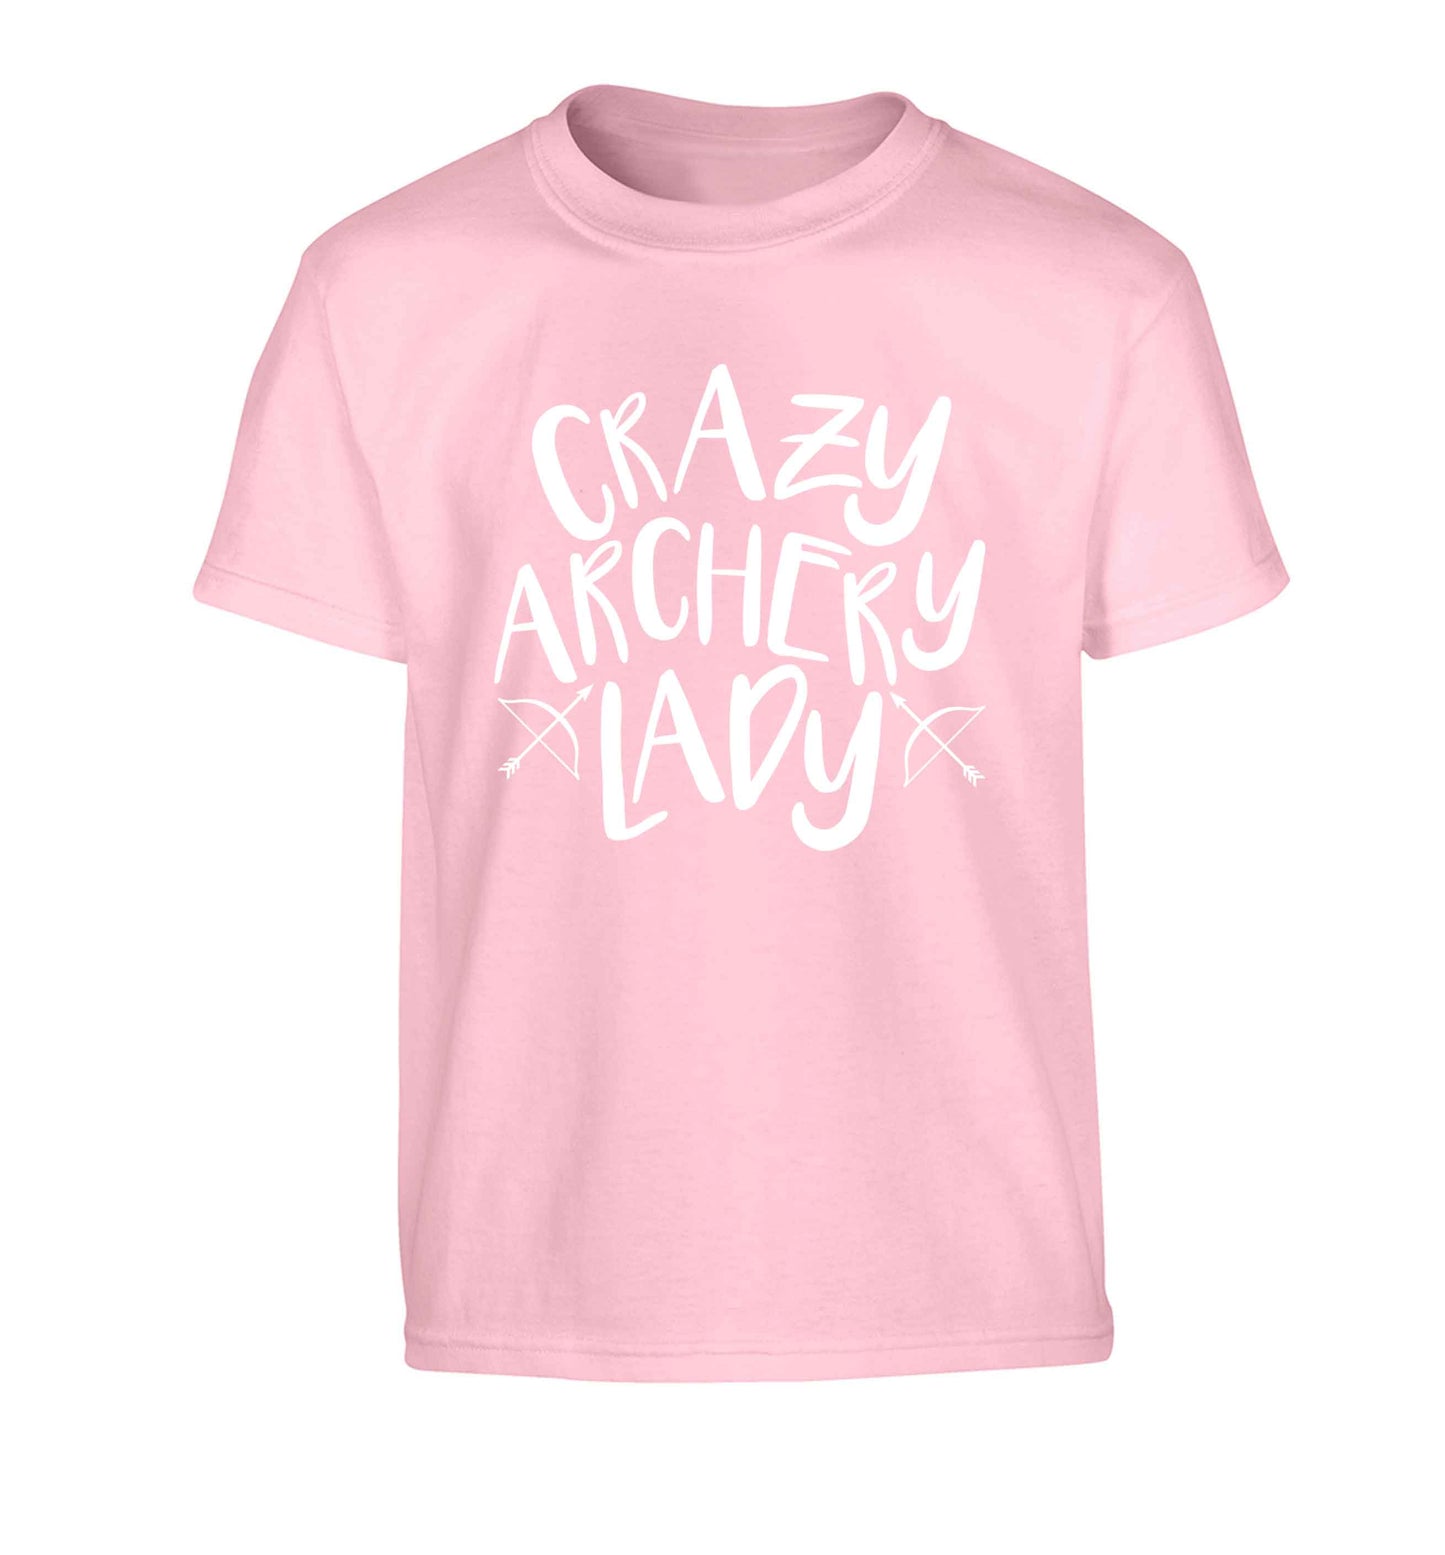 Crazy archery lady Children's light pink Tshirt 12-13 Years